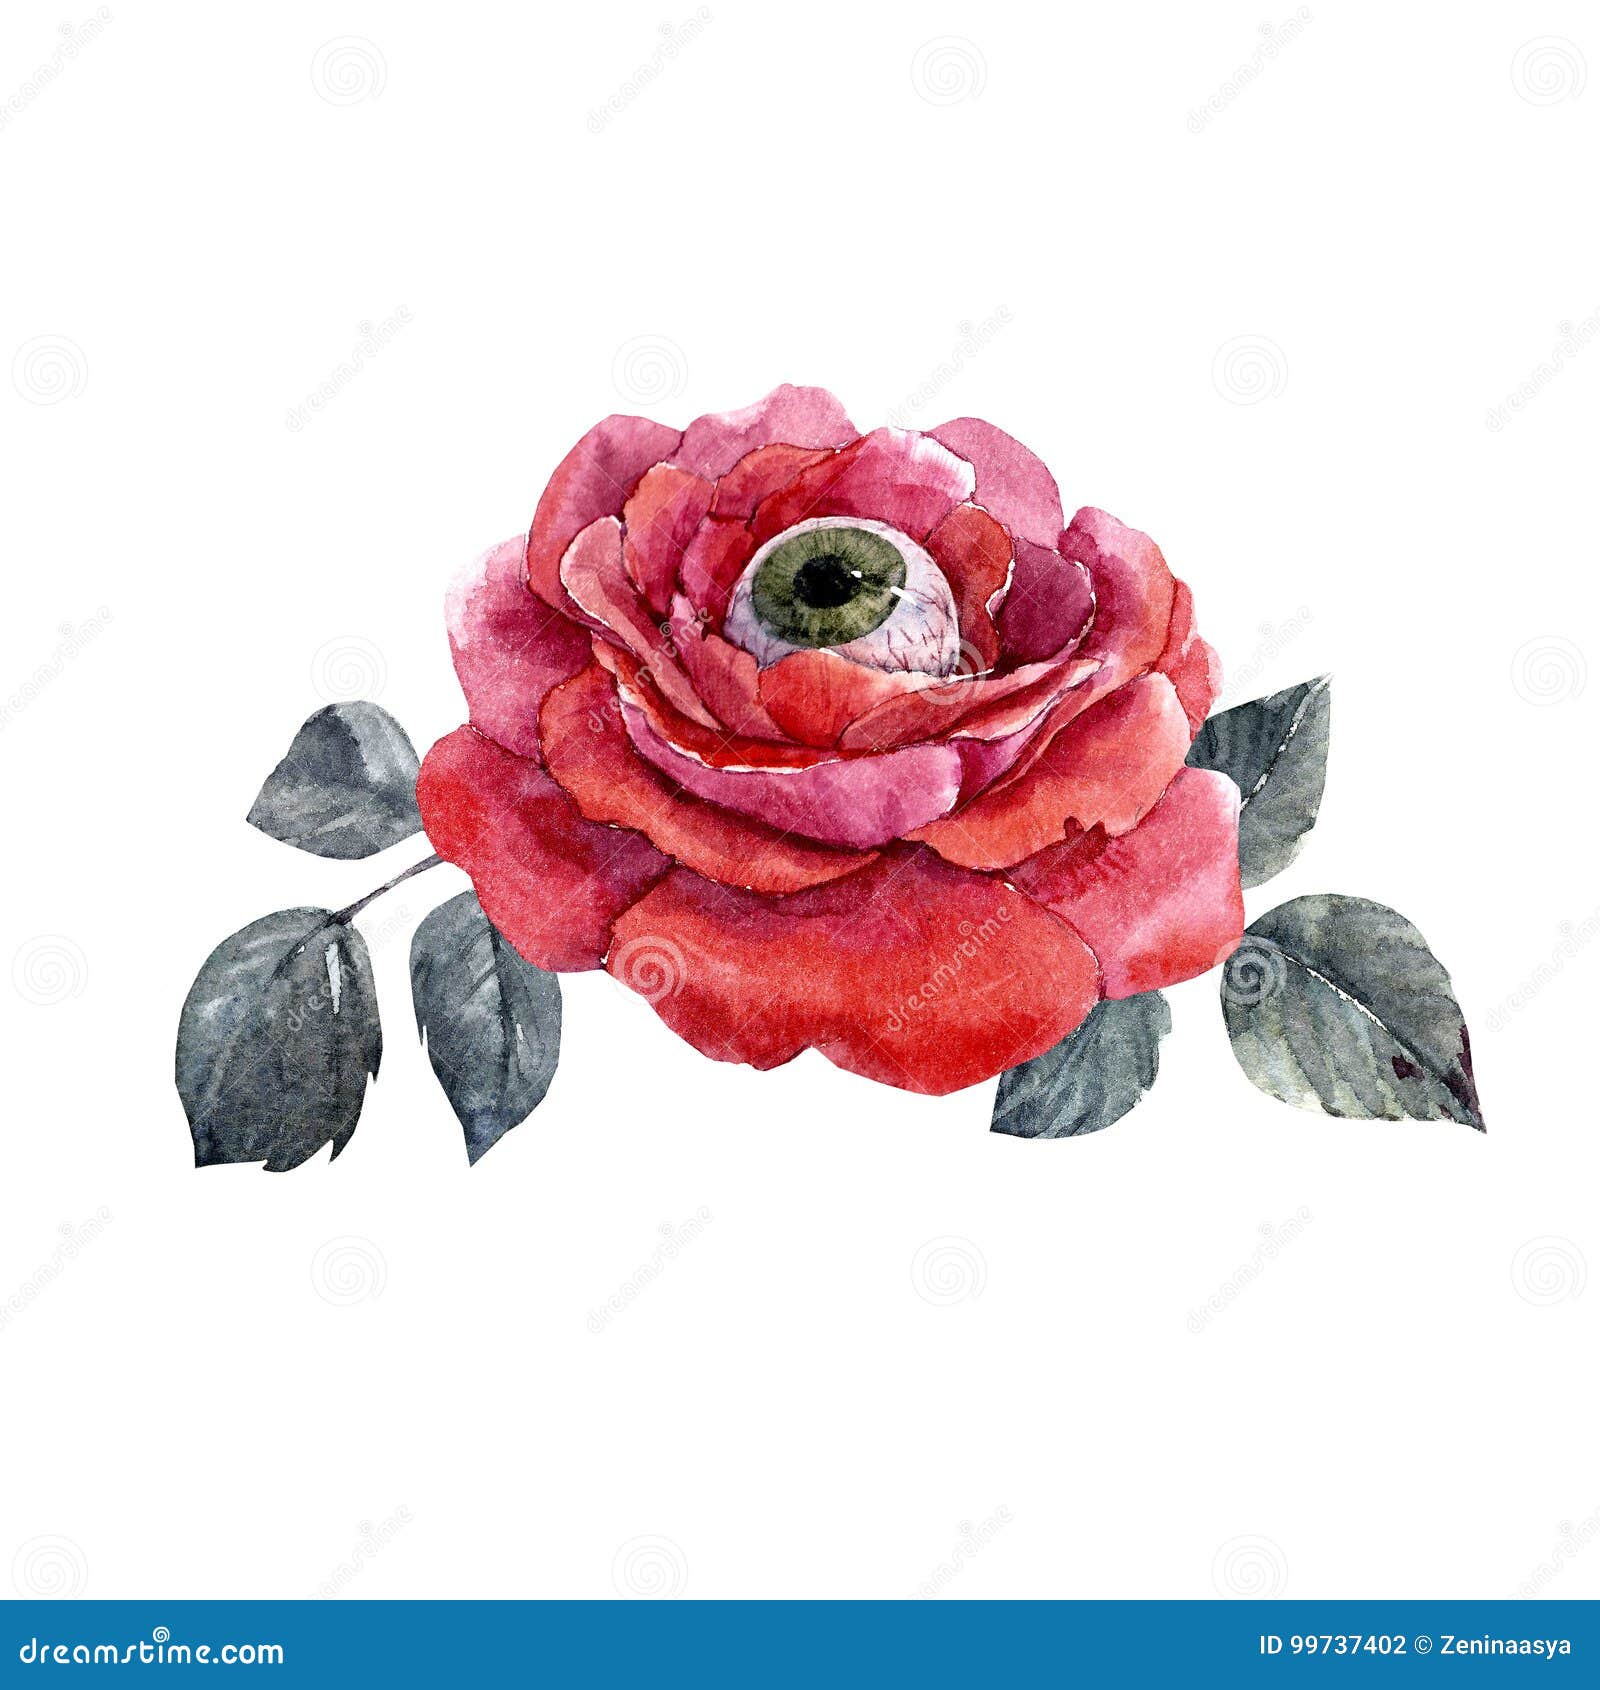 Watercolor halloween rose stock illustration. Illustration of fearful ...